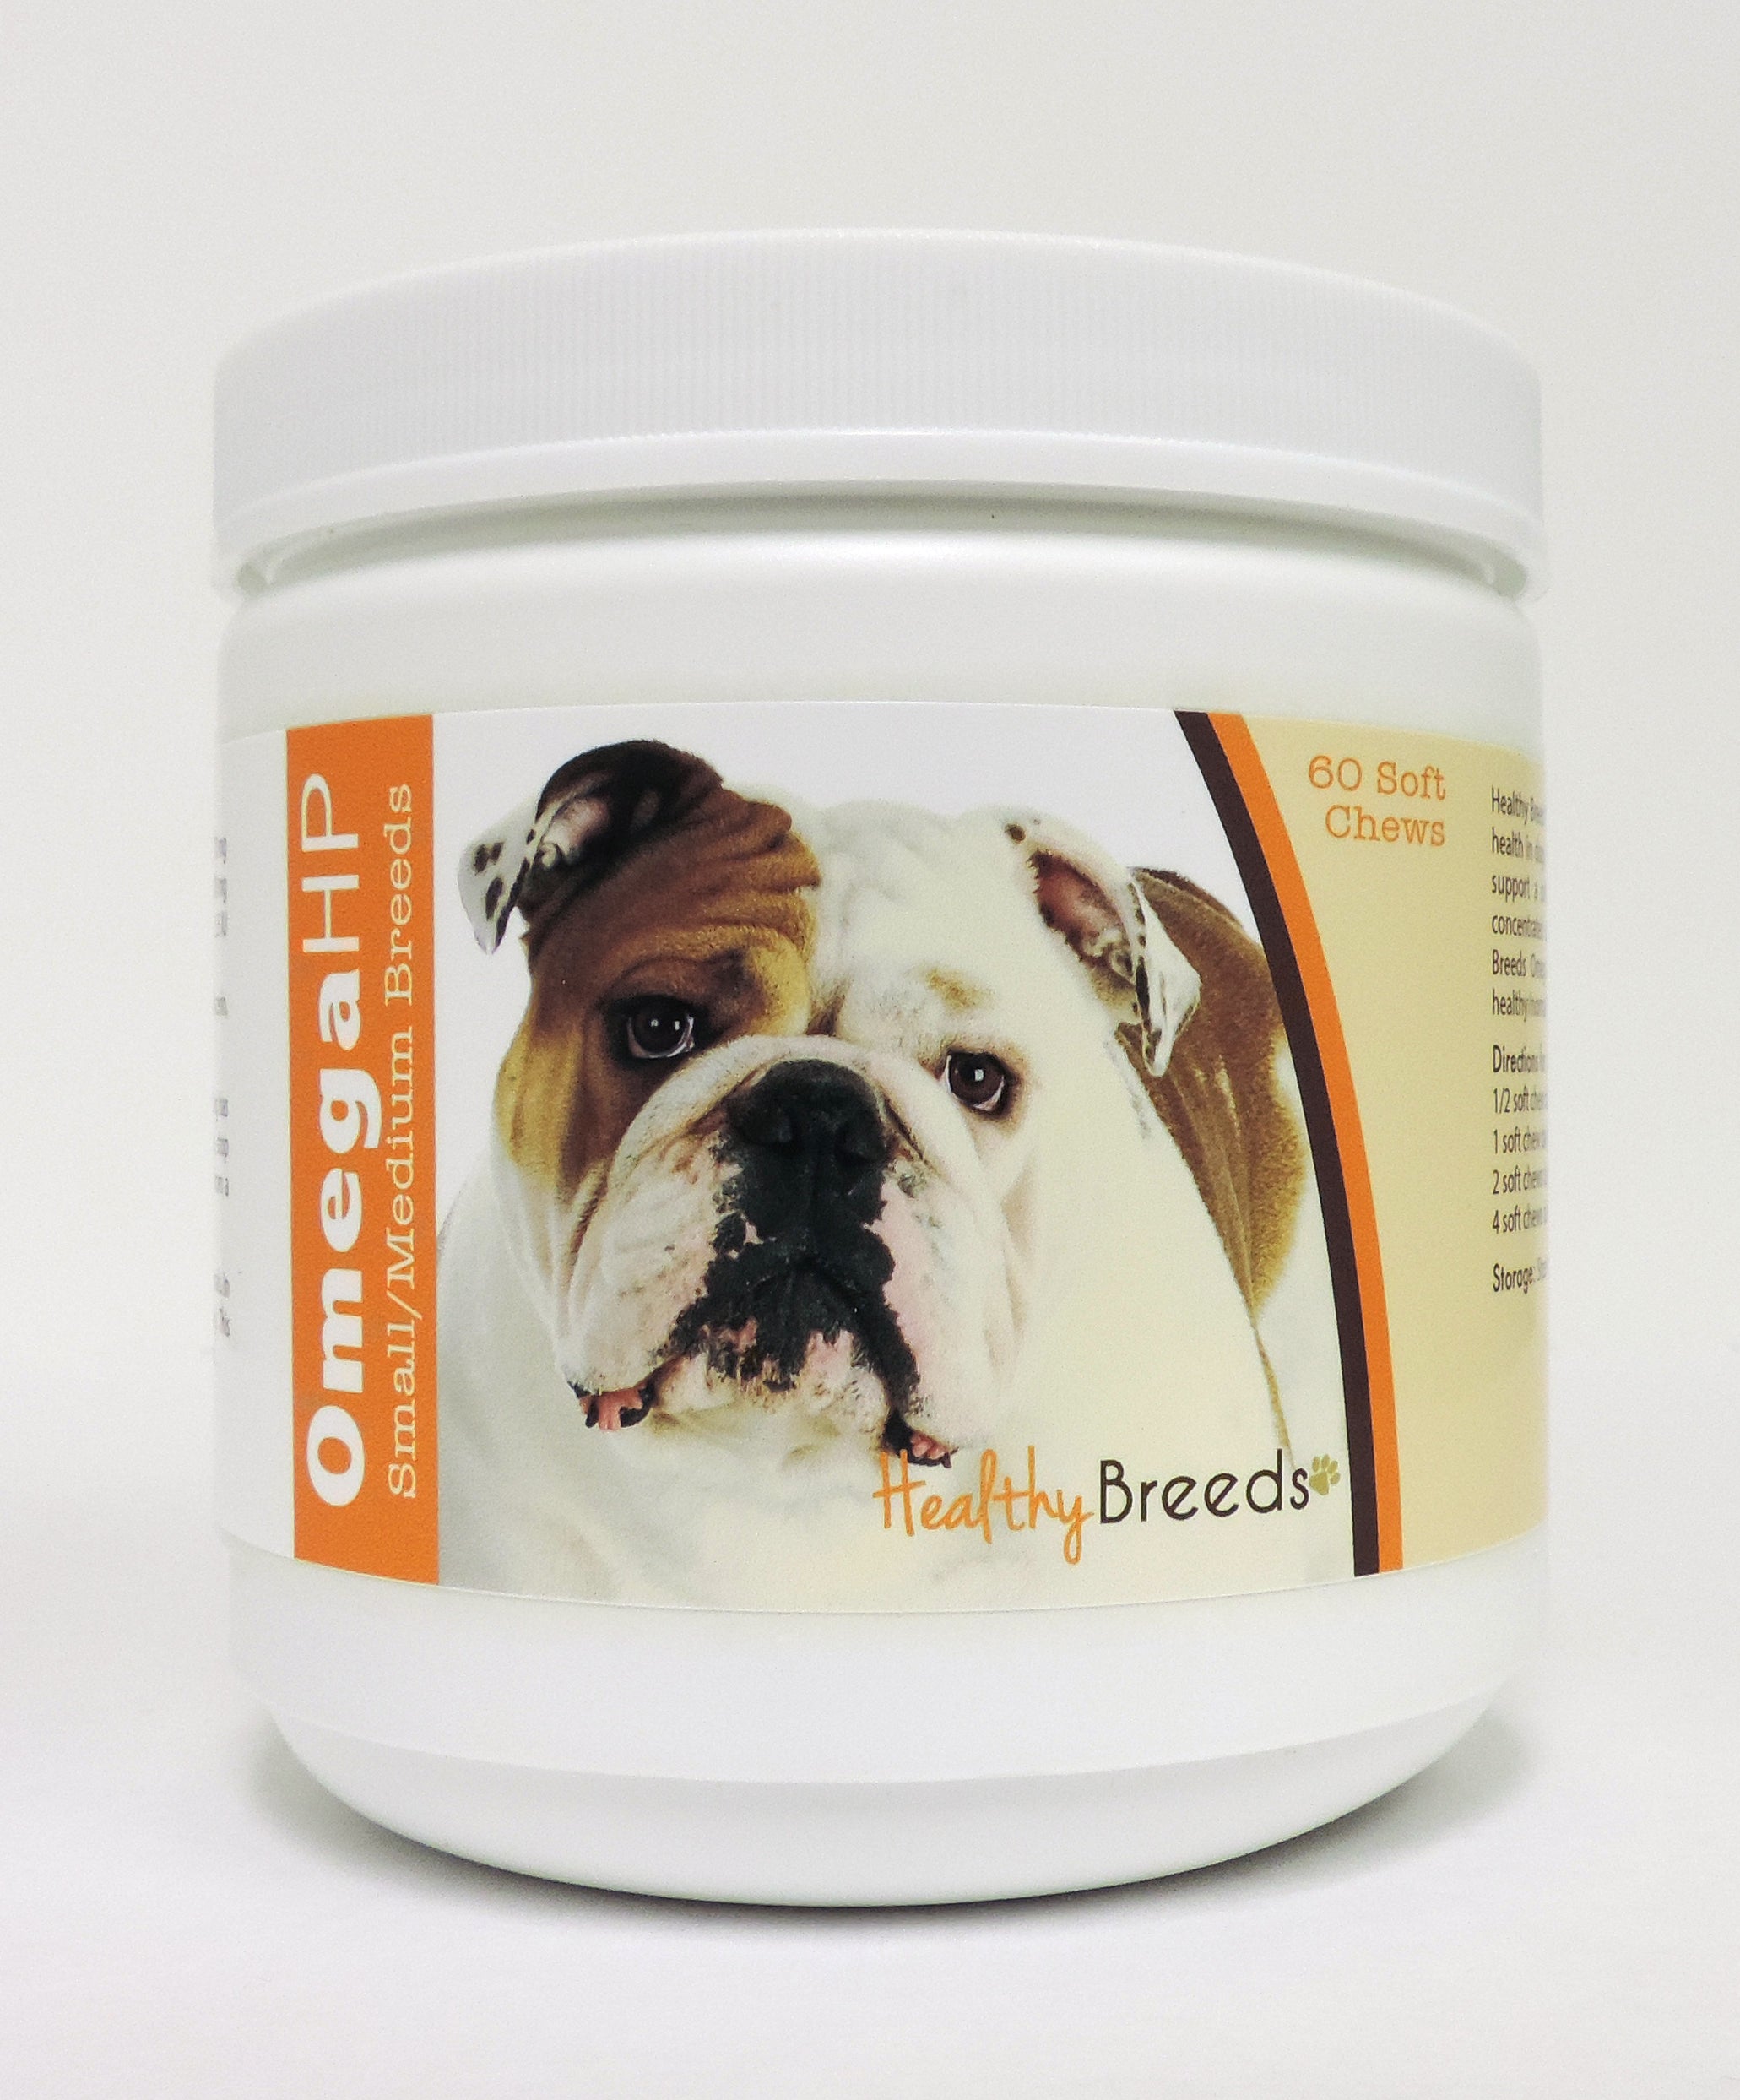 Bulldog Omega HP Fatty Acid Skin and Coat Support Soft Chews 60 Count